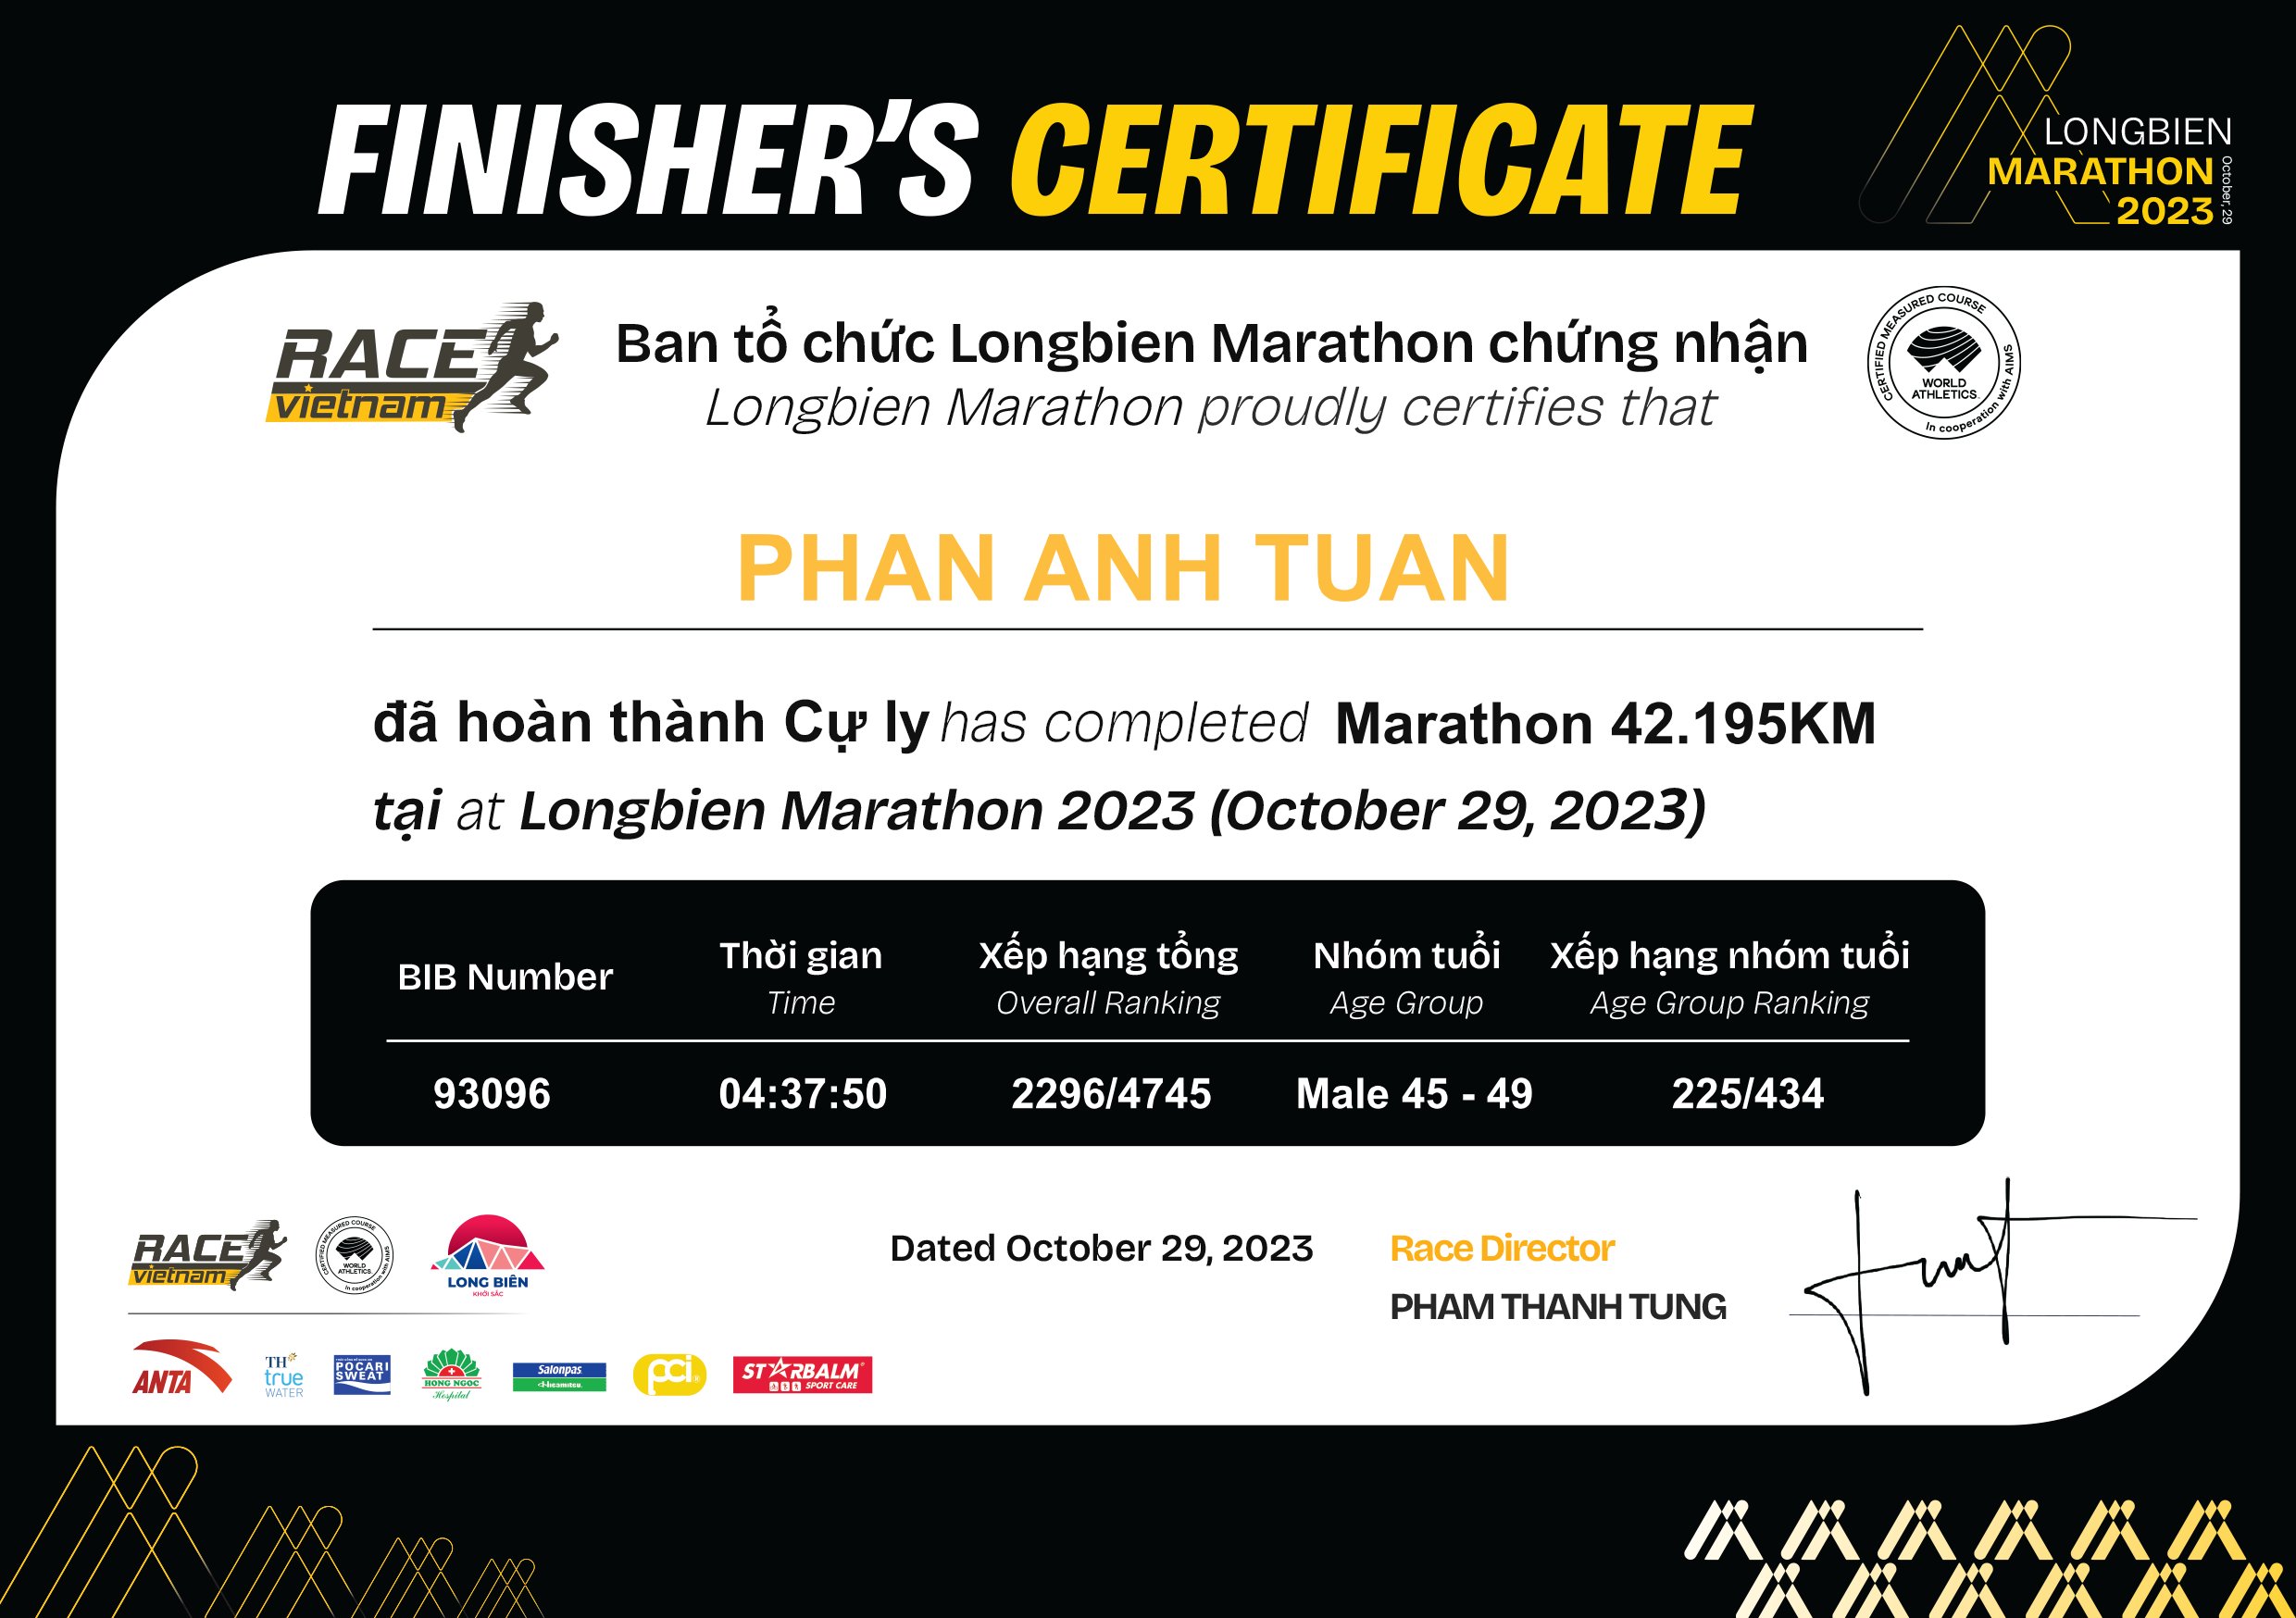 93096 - Phan Anh Tuan